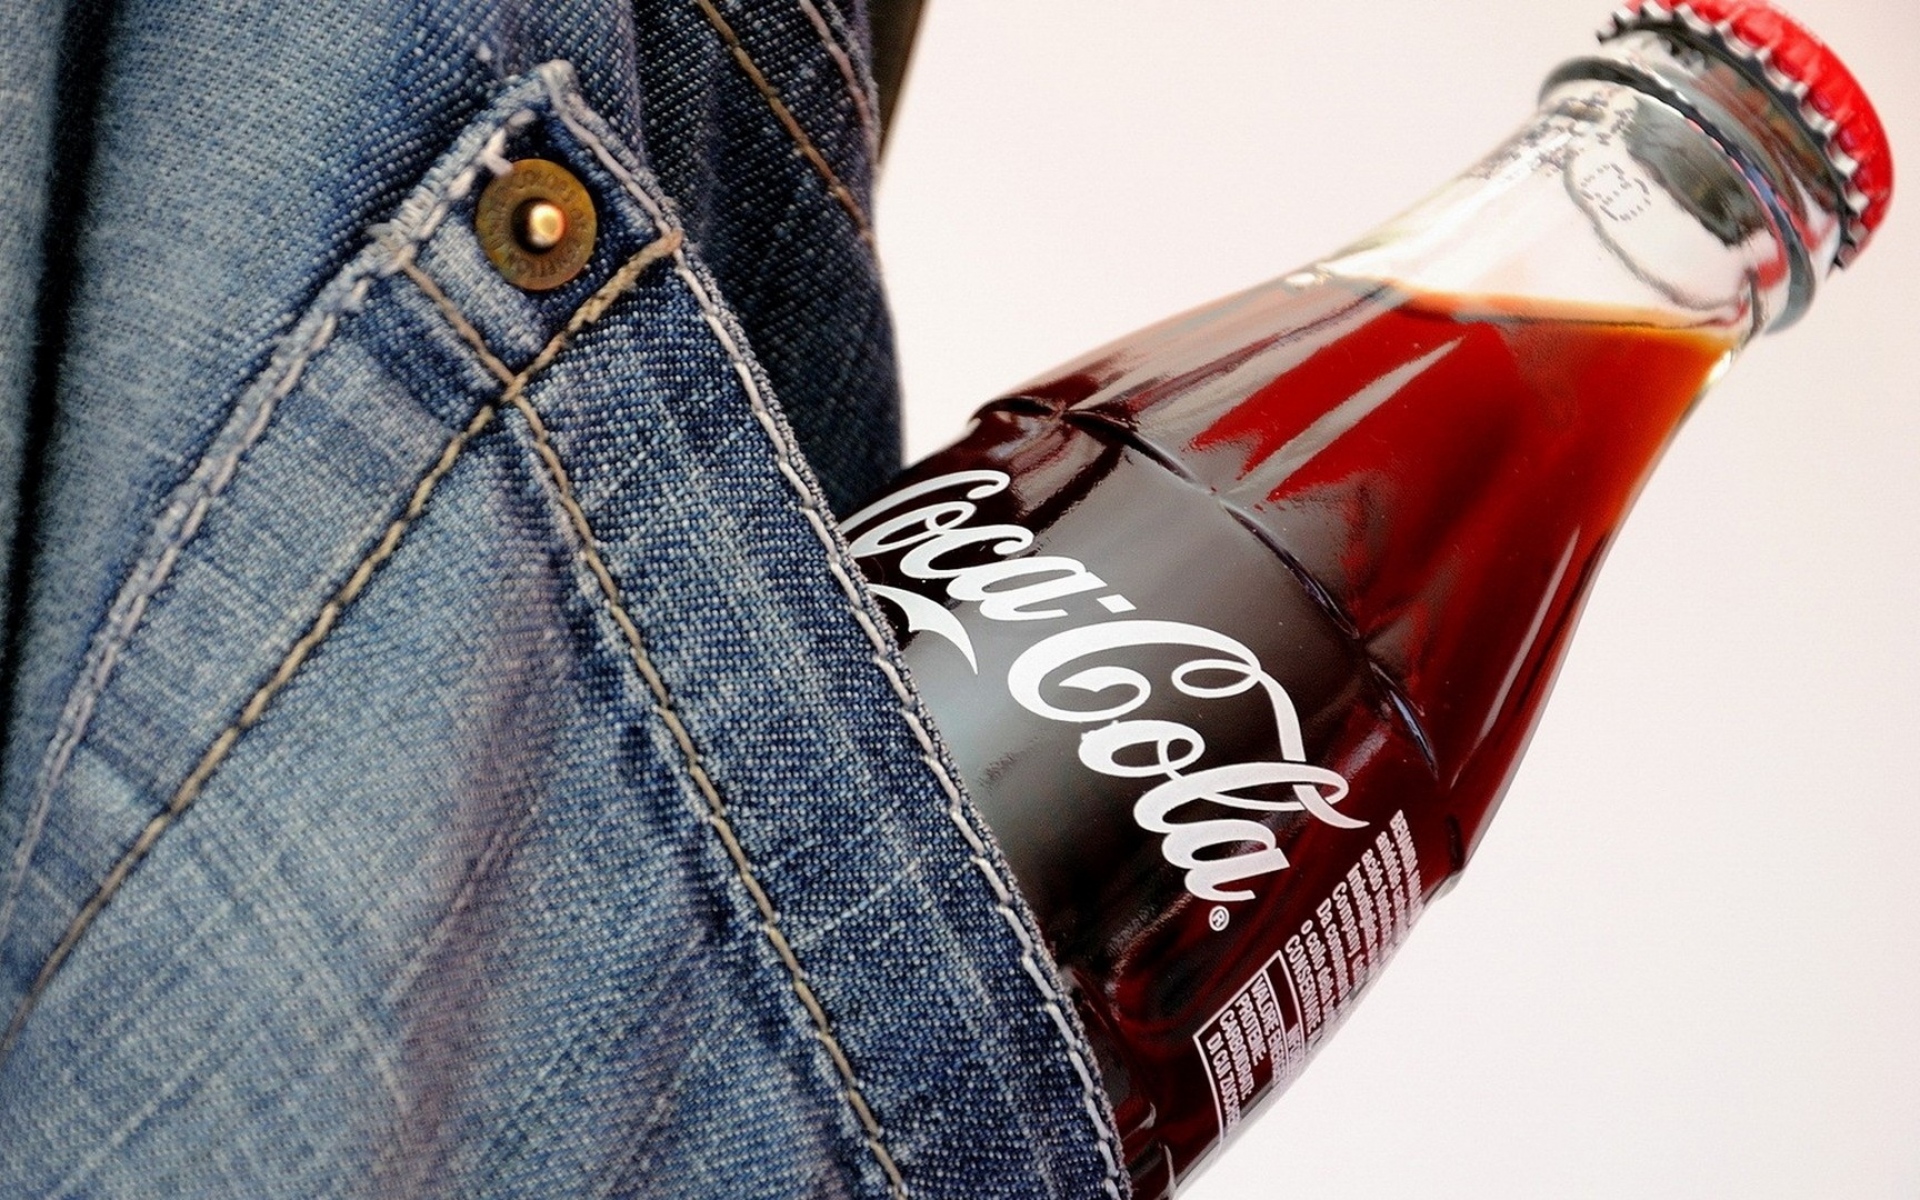 Картинки Кока-кола, напиток, бутылка, карман, джинсы фото и обои на рабочий стол